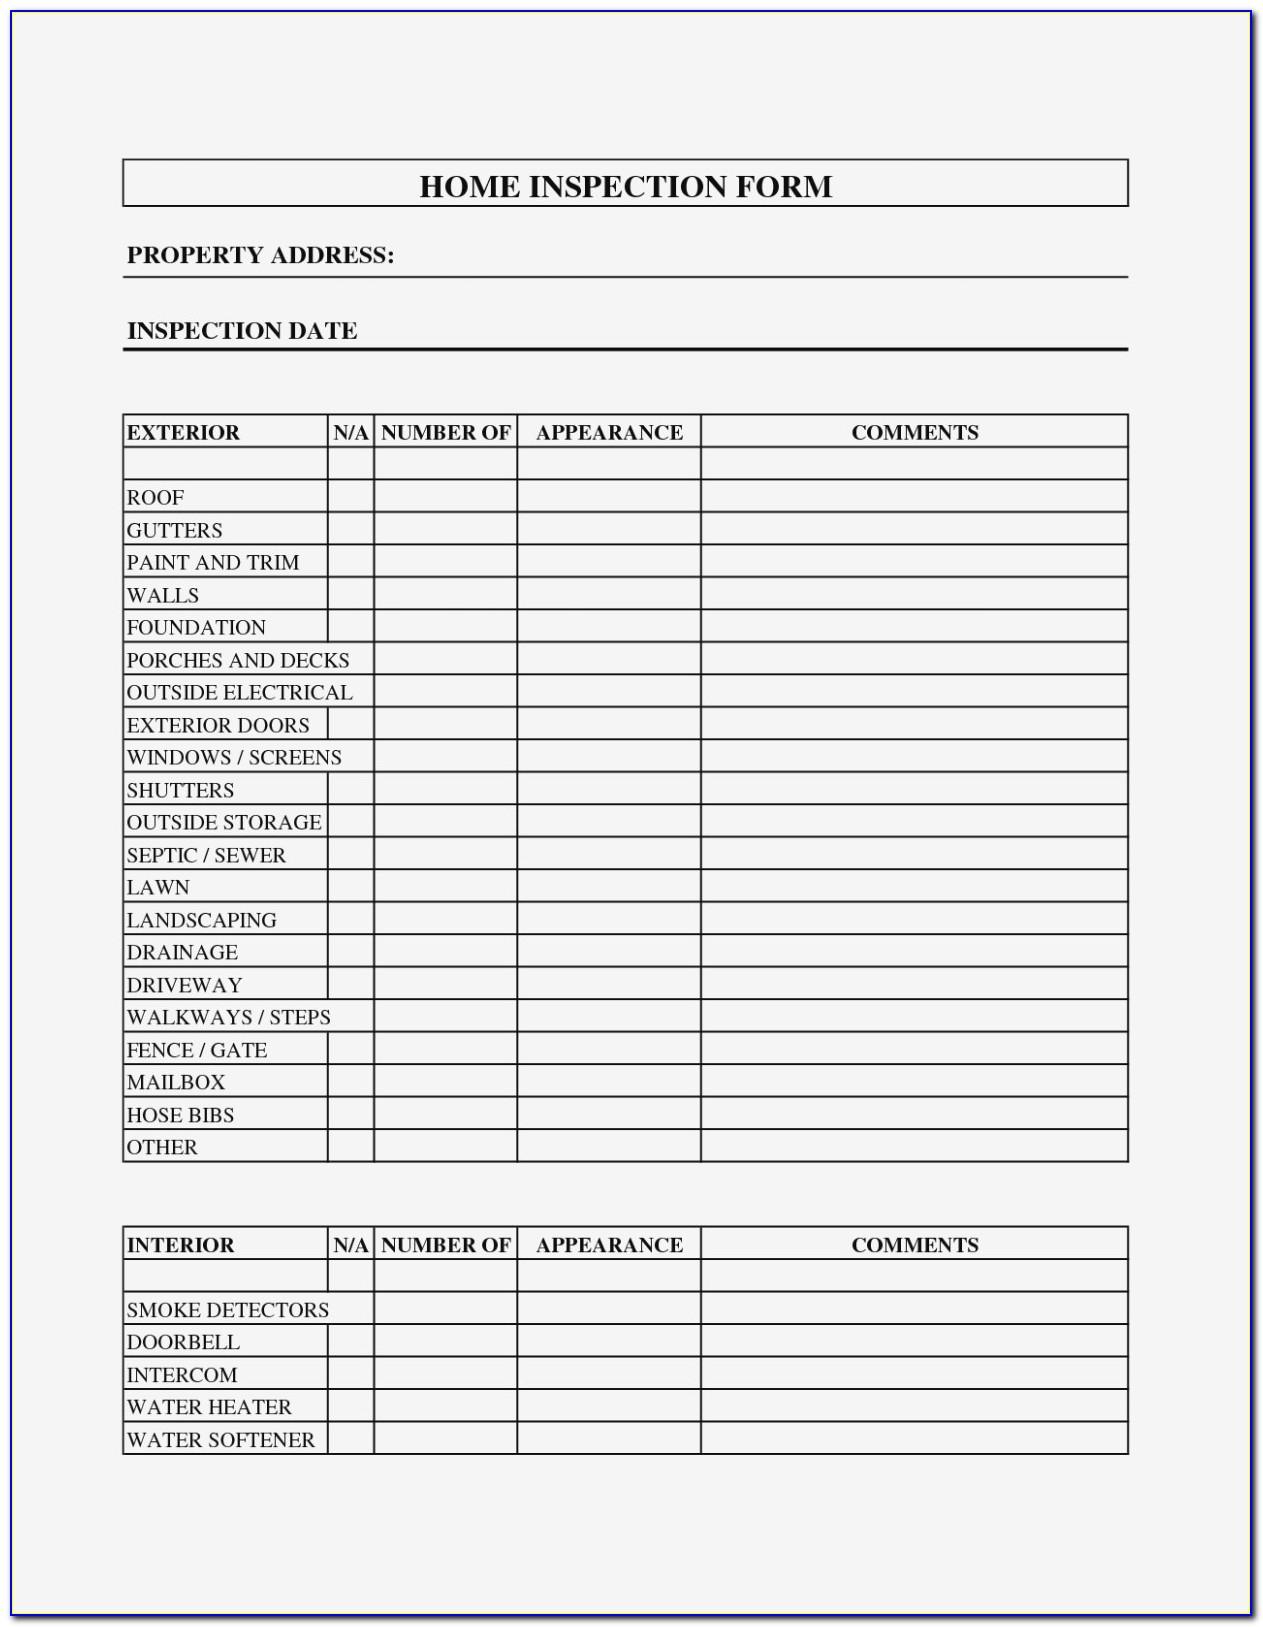 Printable Property Management Checklist